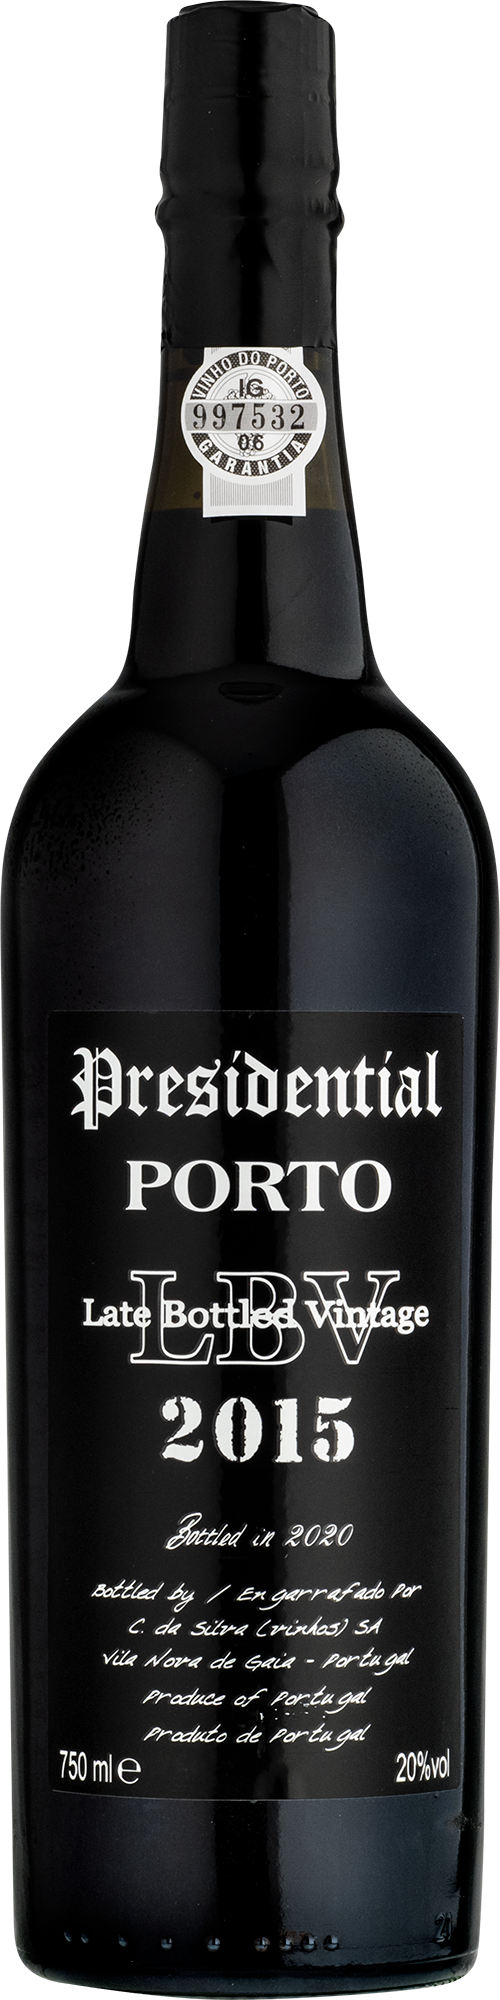 C. da Silva Late Bottled Vintage LBV Porto 2015